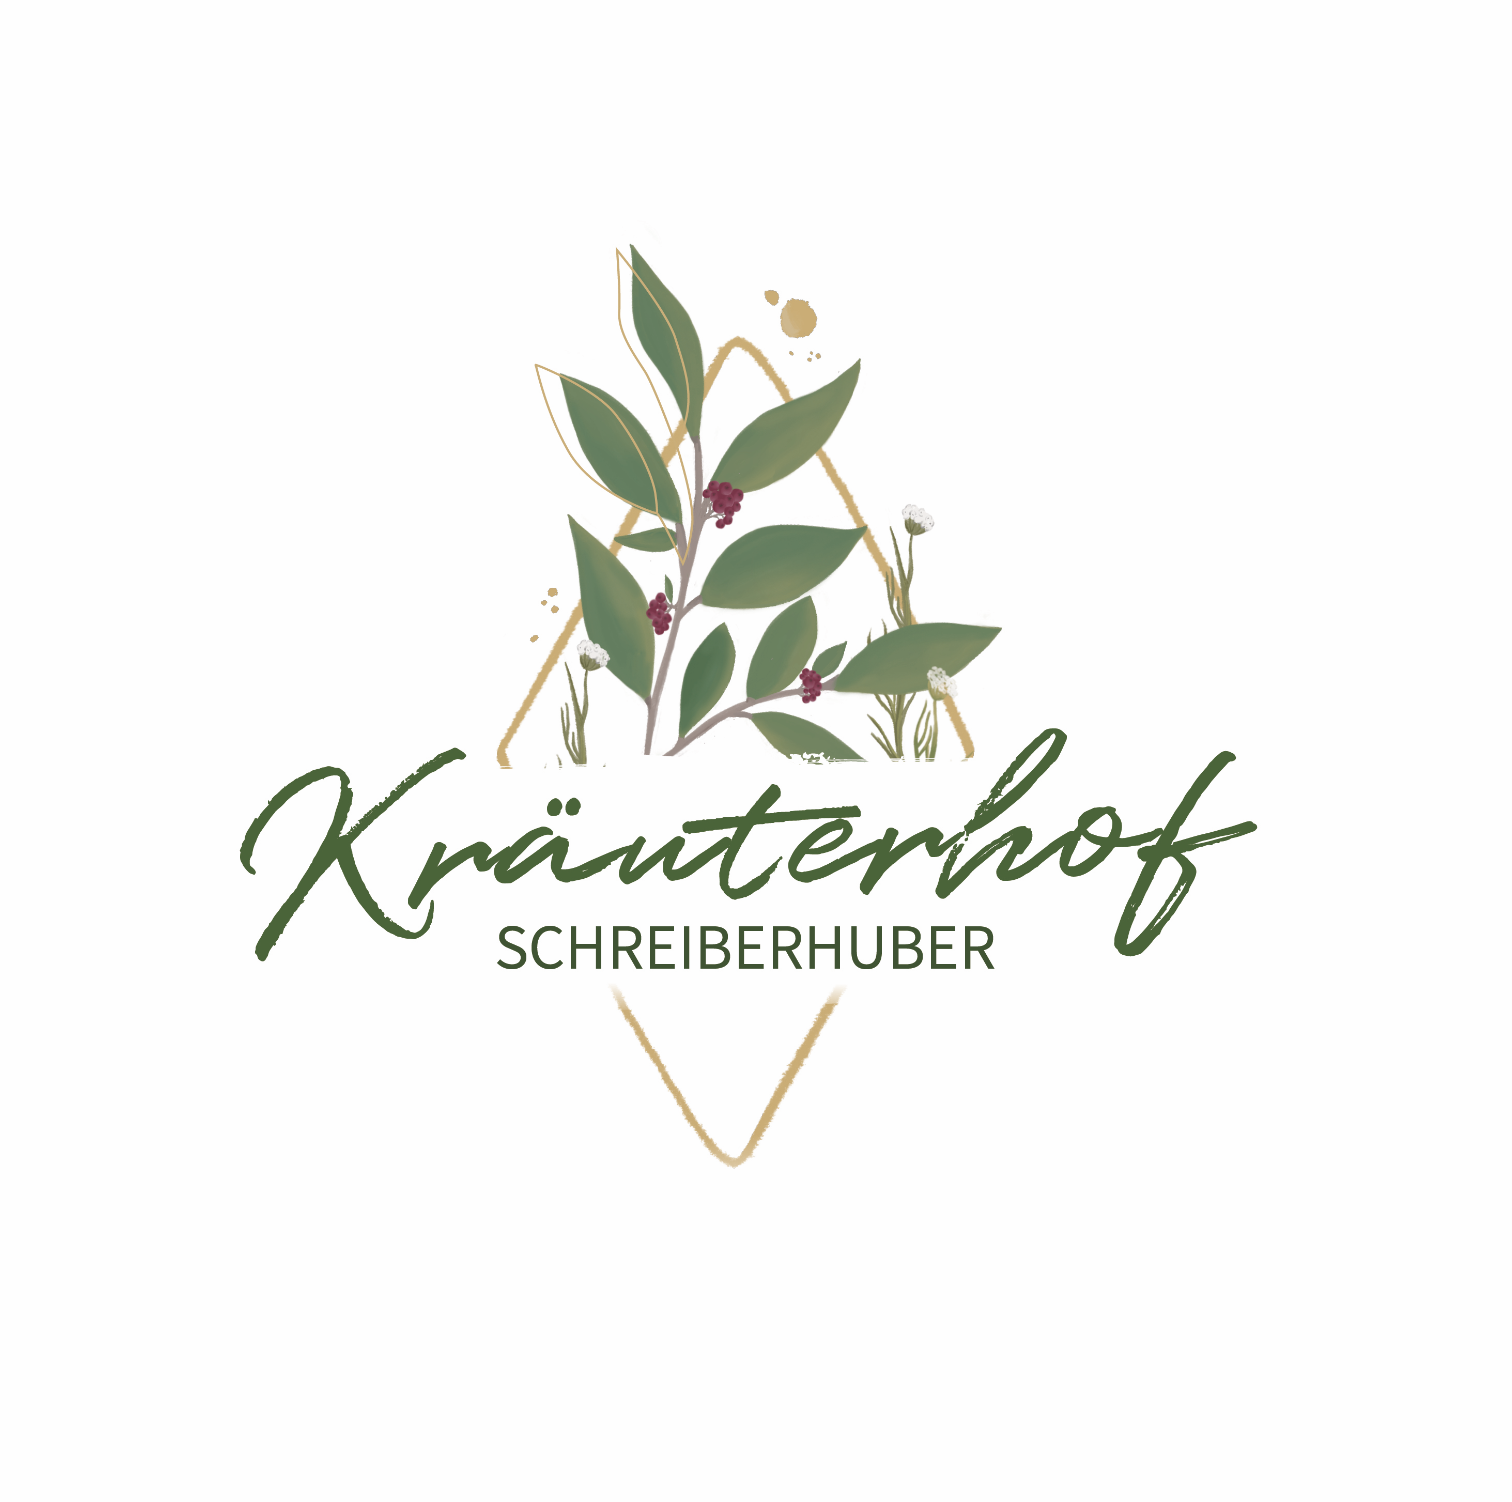 Kraeuterhof_Schreiberhuber